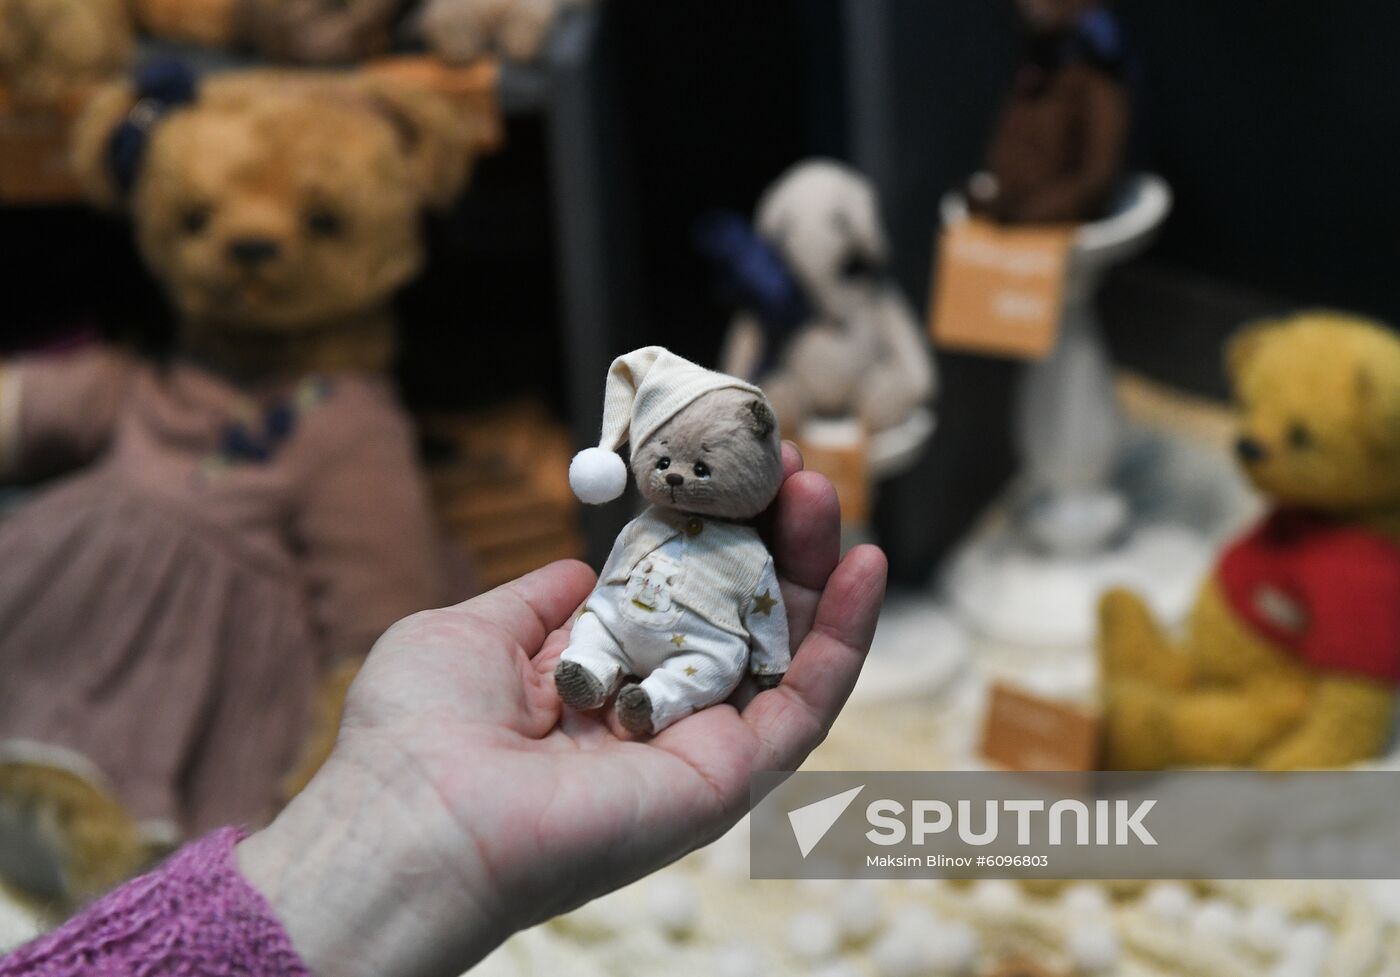 Russia Teddy Bears Exhibition